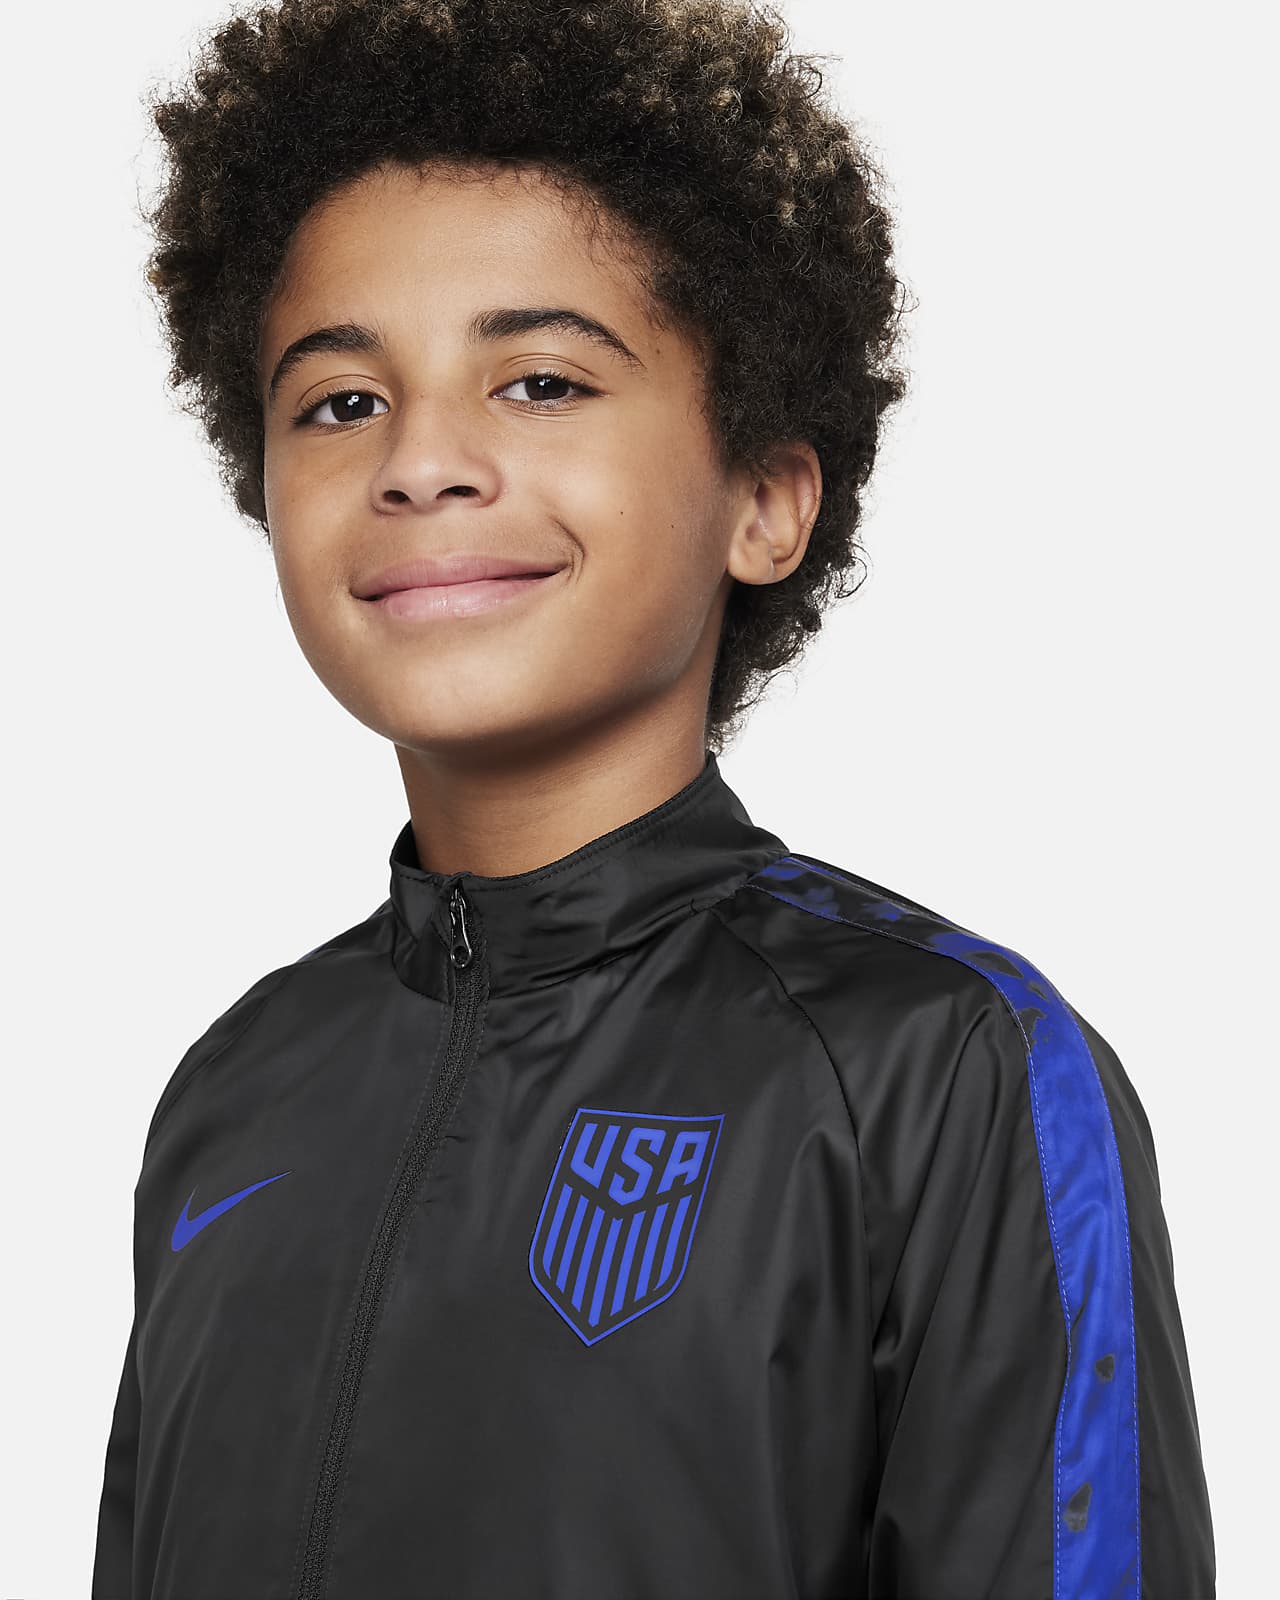 U.S. Repel Academy AWF Big Kids' Soccer Jacket